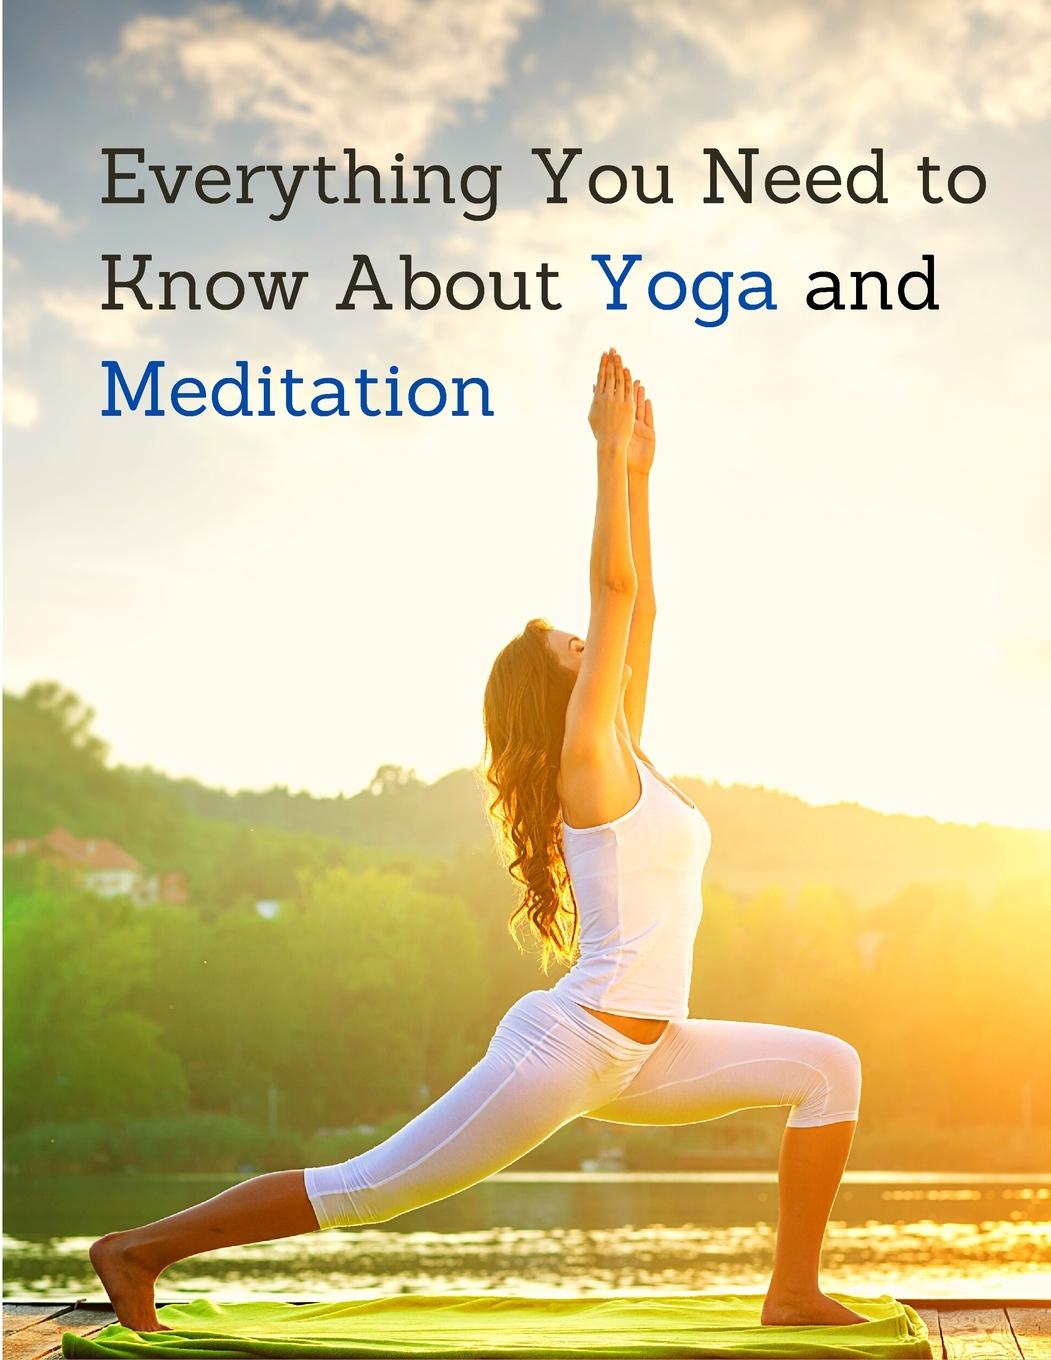 Carte Yoga and Meditation 